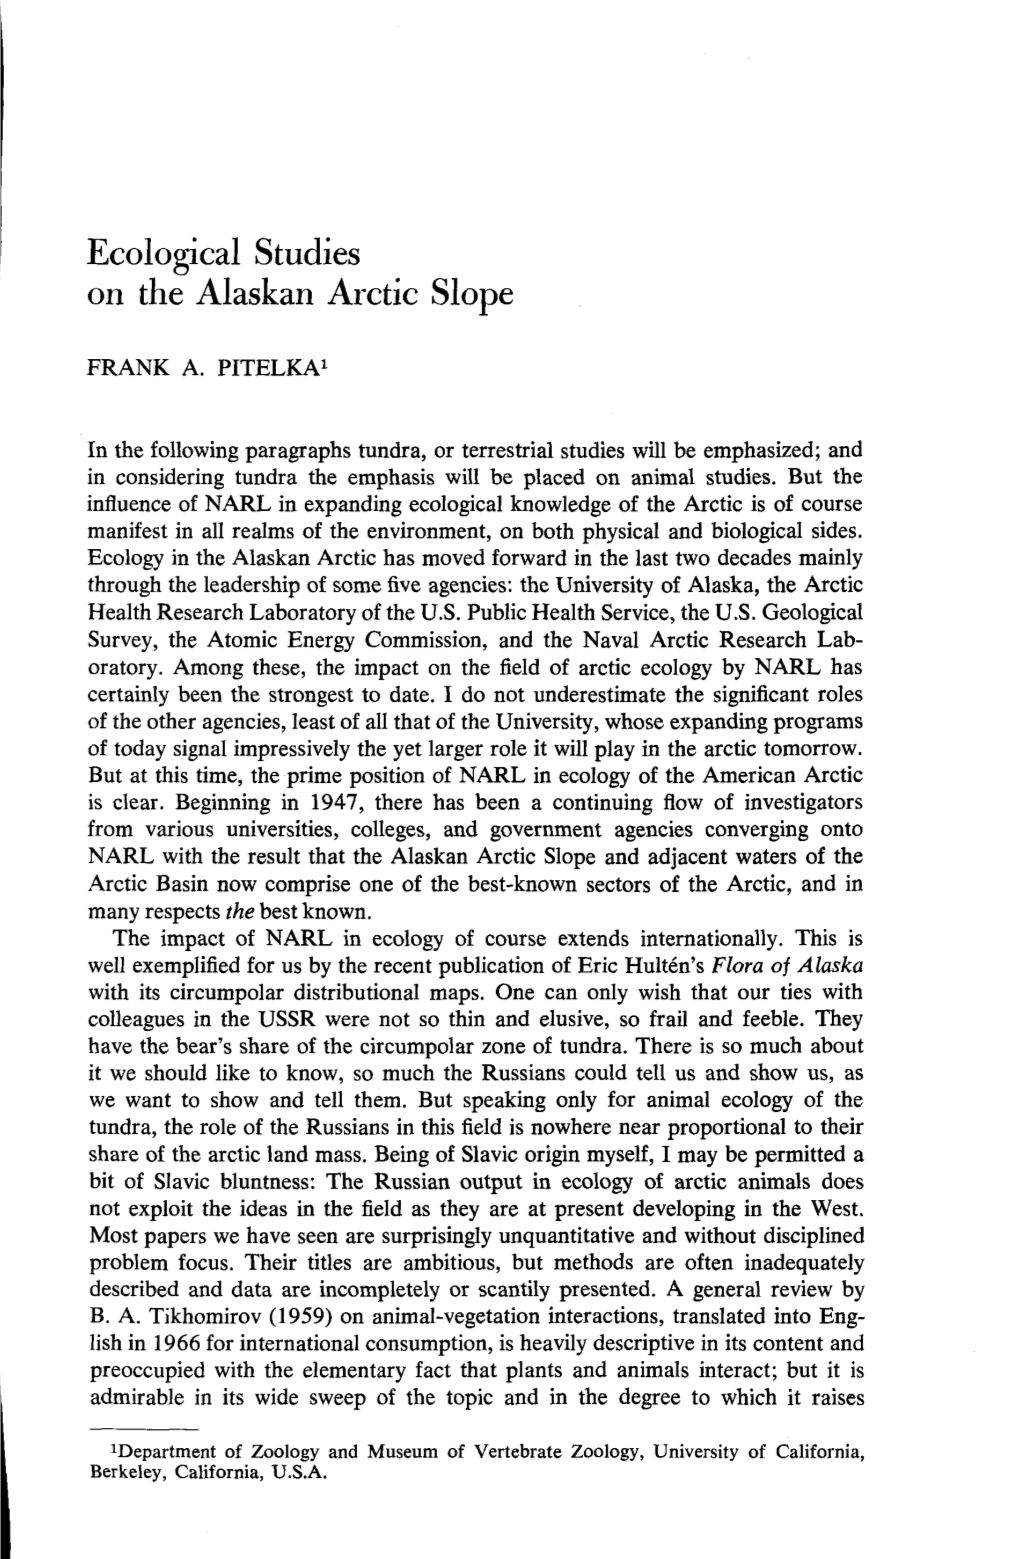 Ecological Studies on the Alaskan Arctic Slope